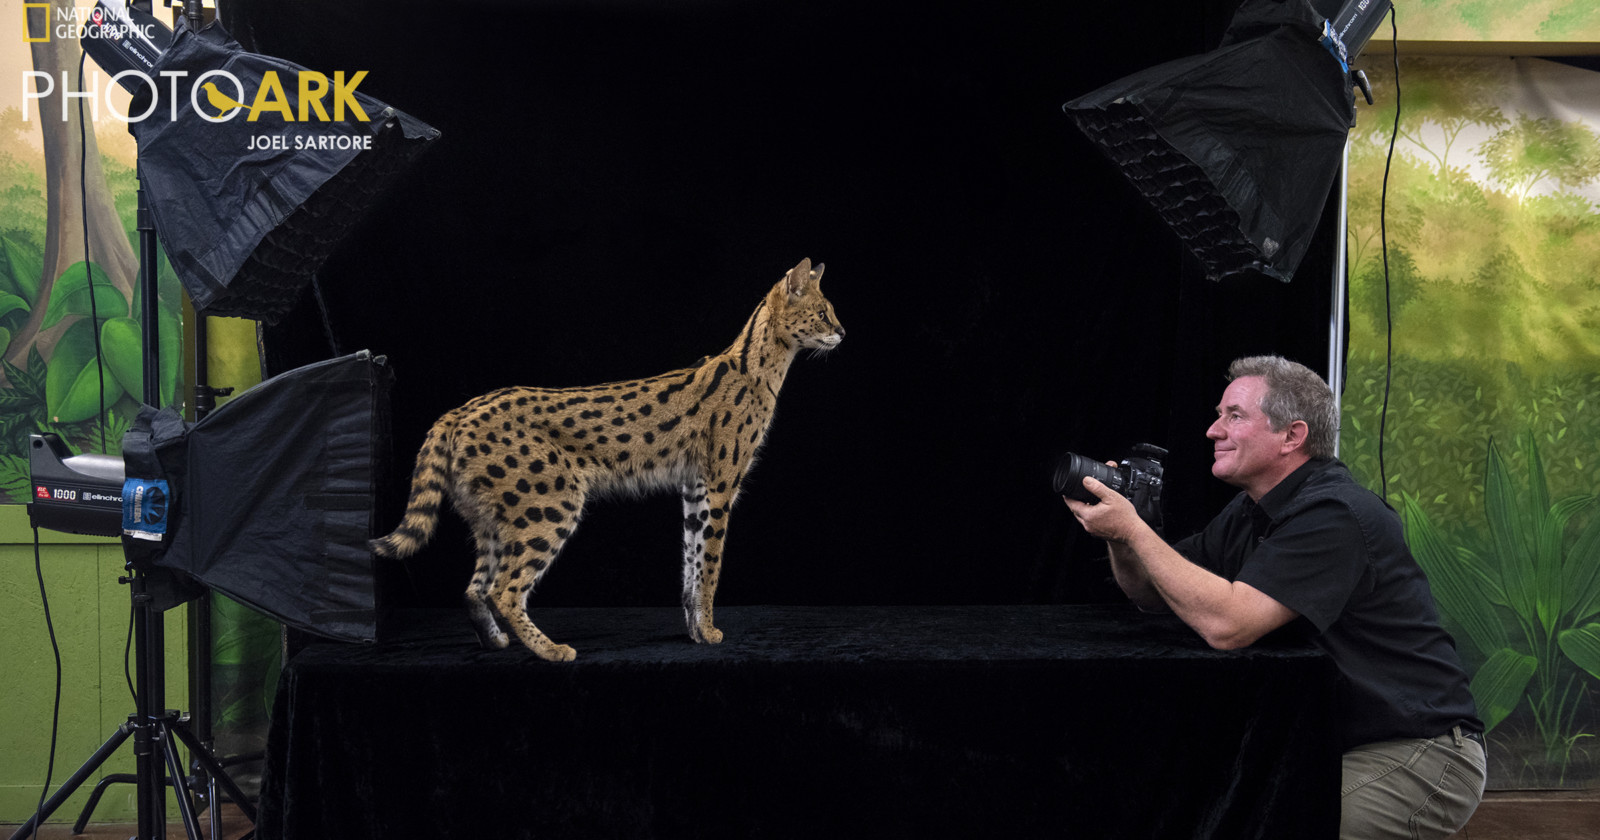  photo ark photographer mission capture 000 animal species 